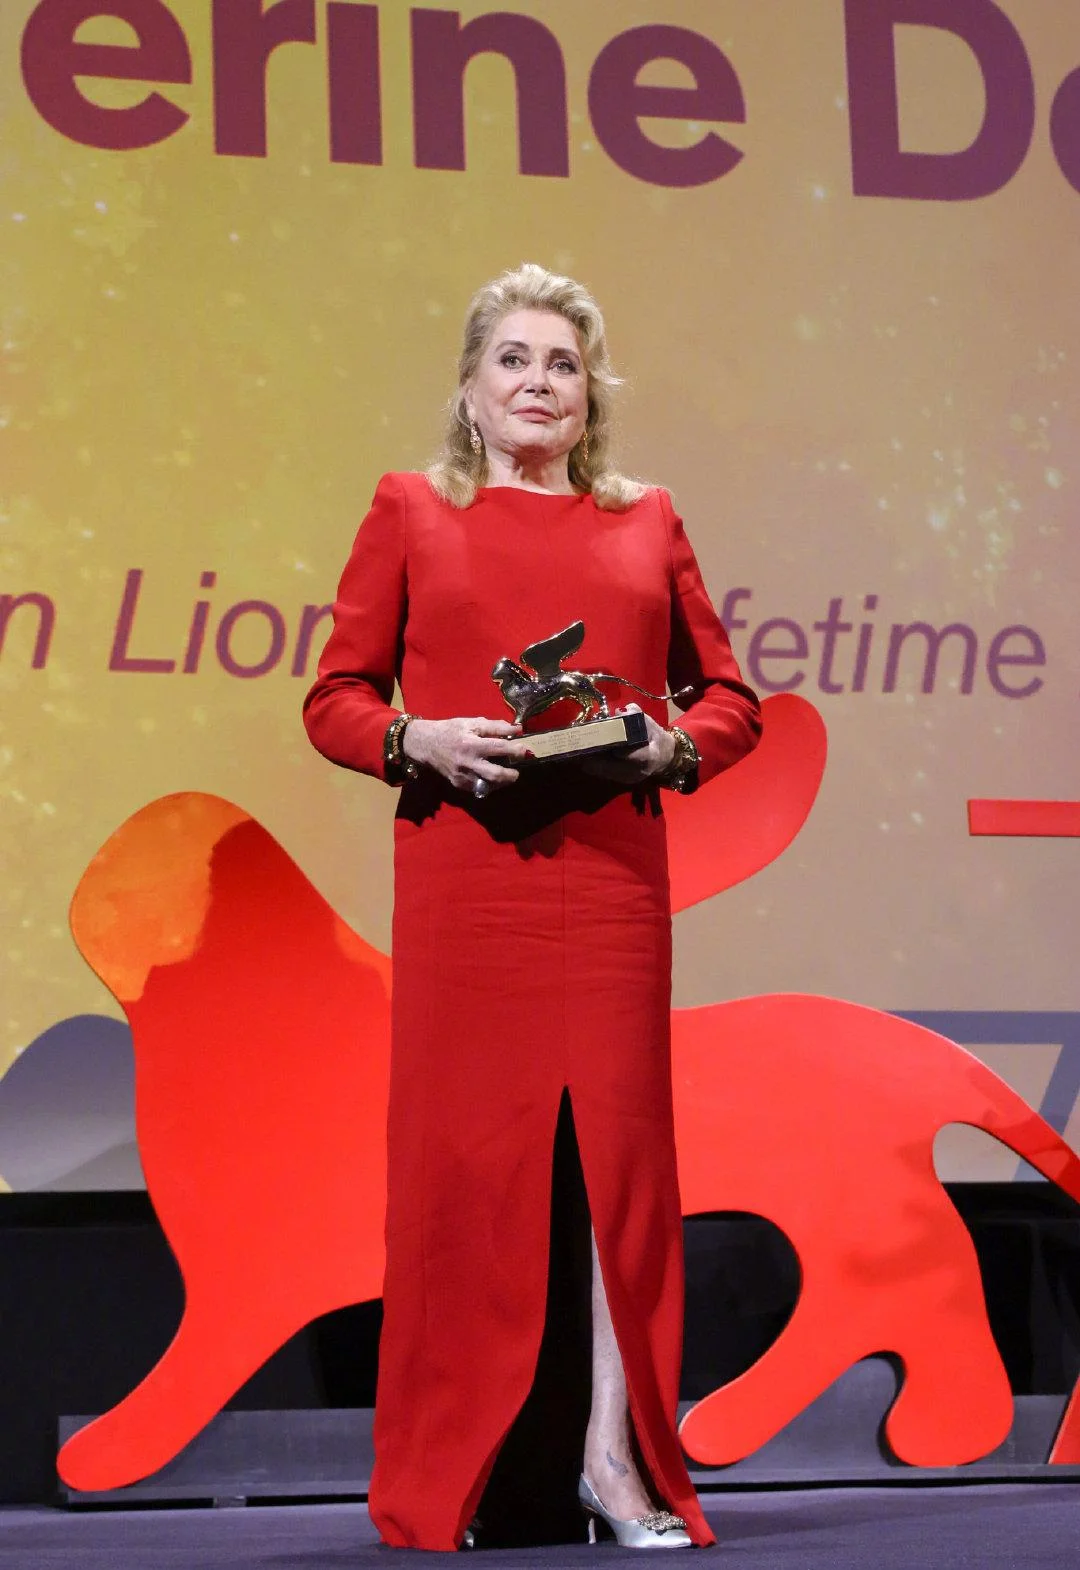 Catherine Deneuve receives Golden Lion for Lifetime Achievement at 79 Venice International Film Festival | FMV6